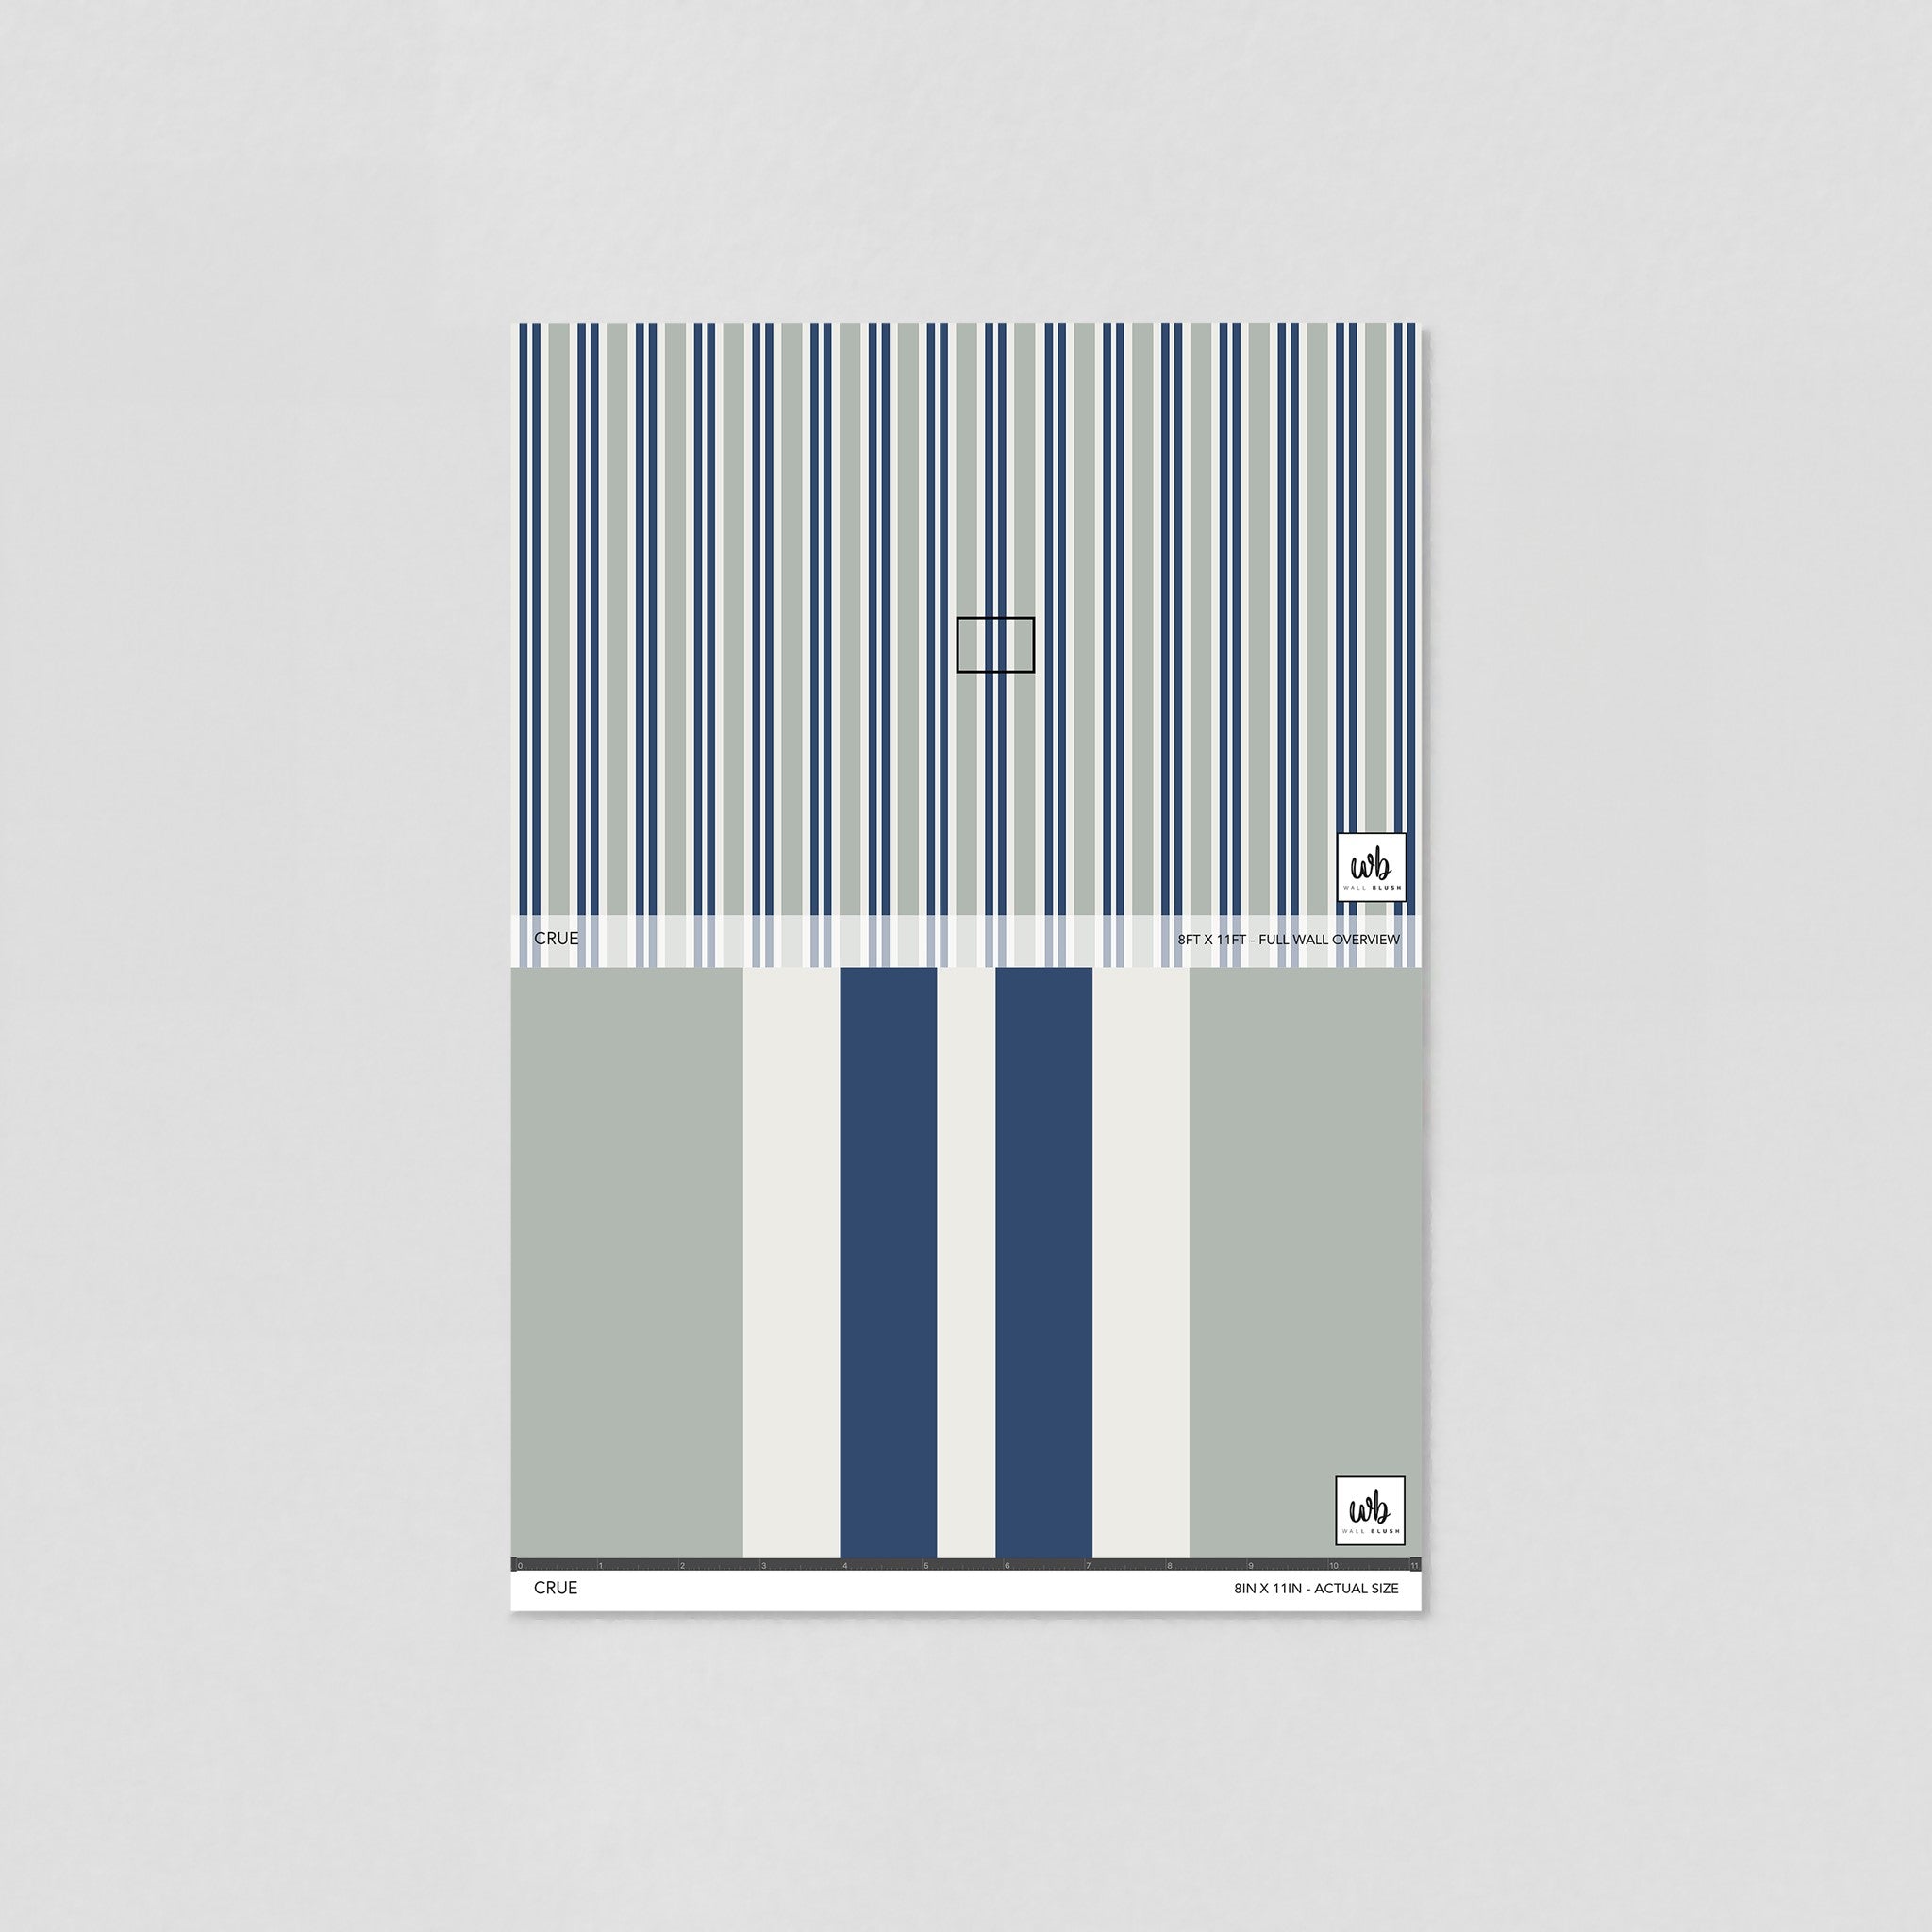 "Wall Blush Crue Wallpaper sample showcasing modern stripe design for home interiors."